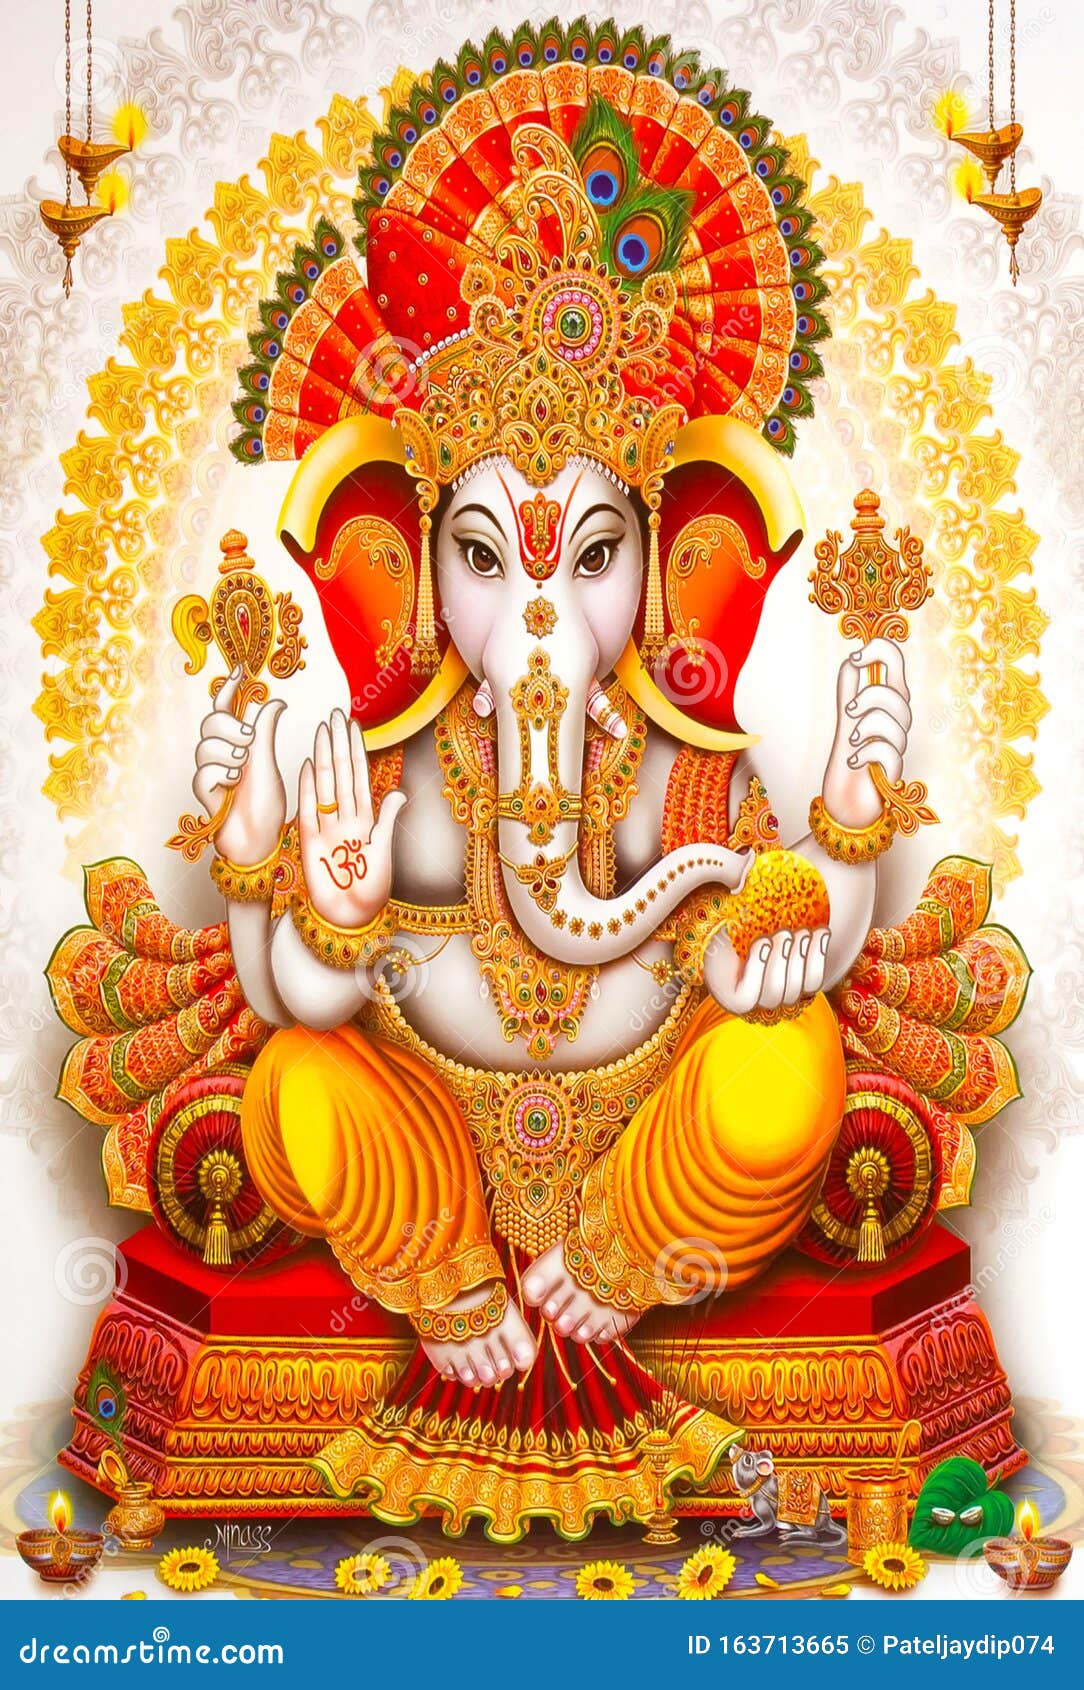 Hindu Lord Ganesha Texture Wallpaper Background Stock Image - Image of  background, design: 163713665